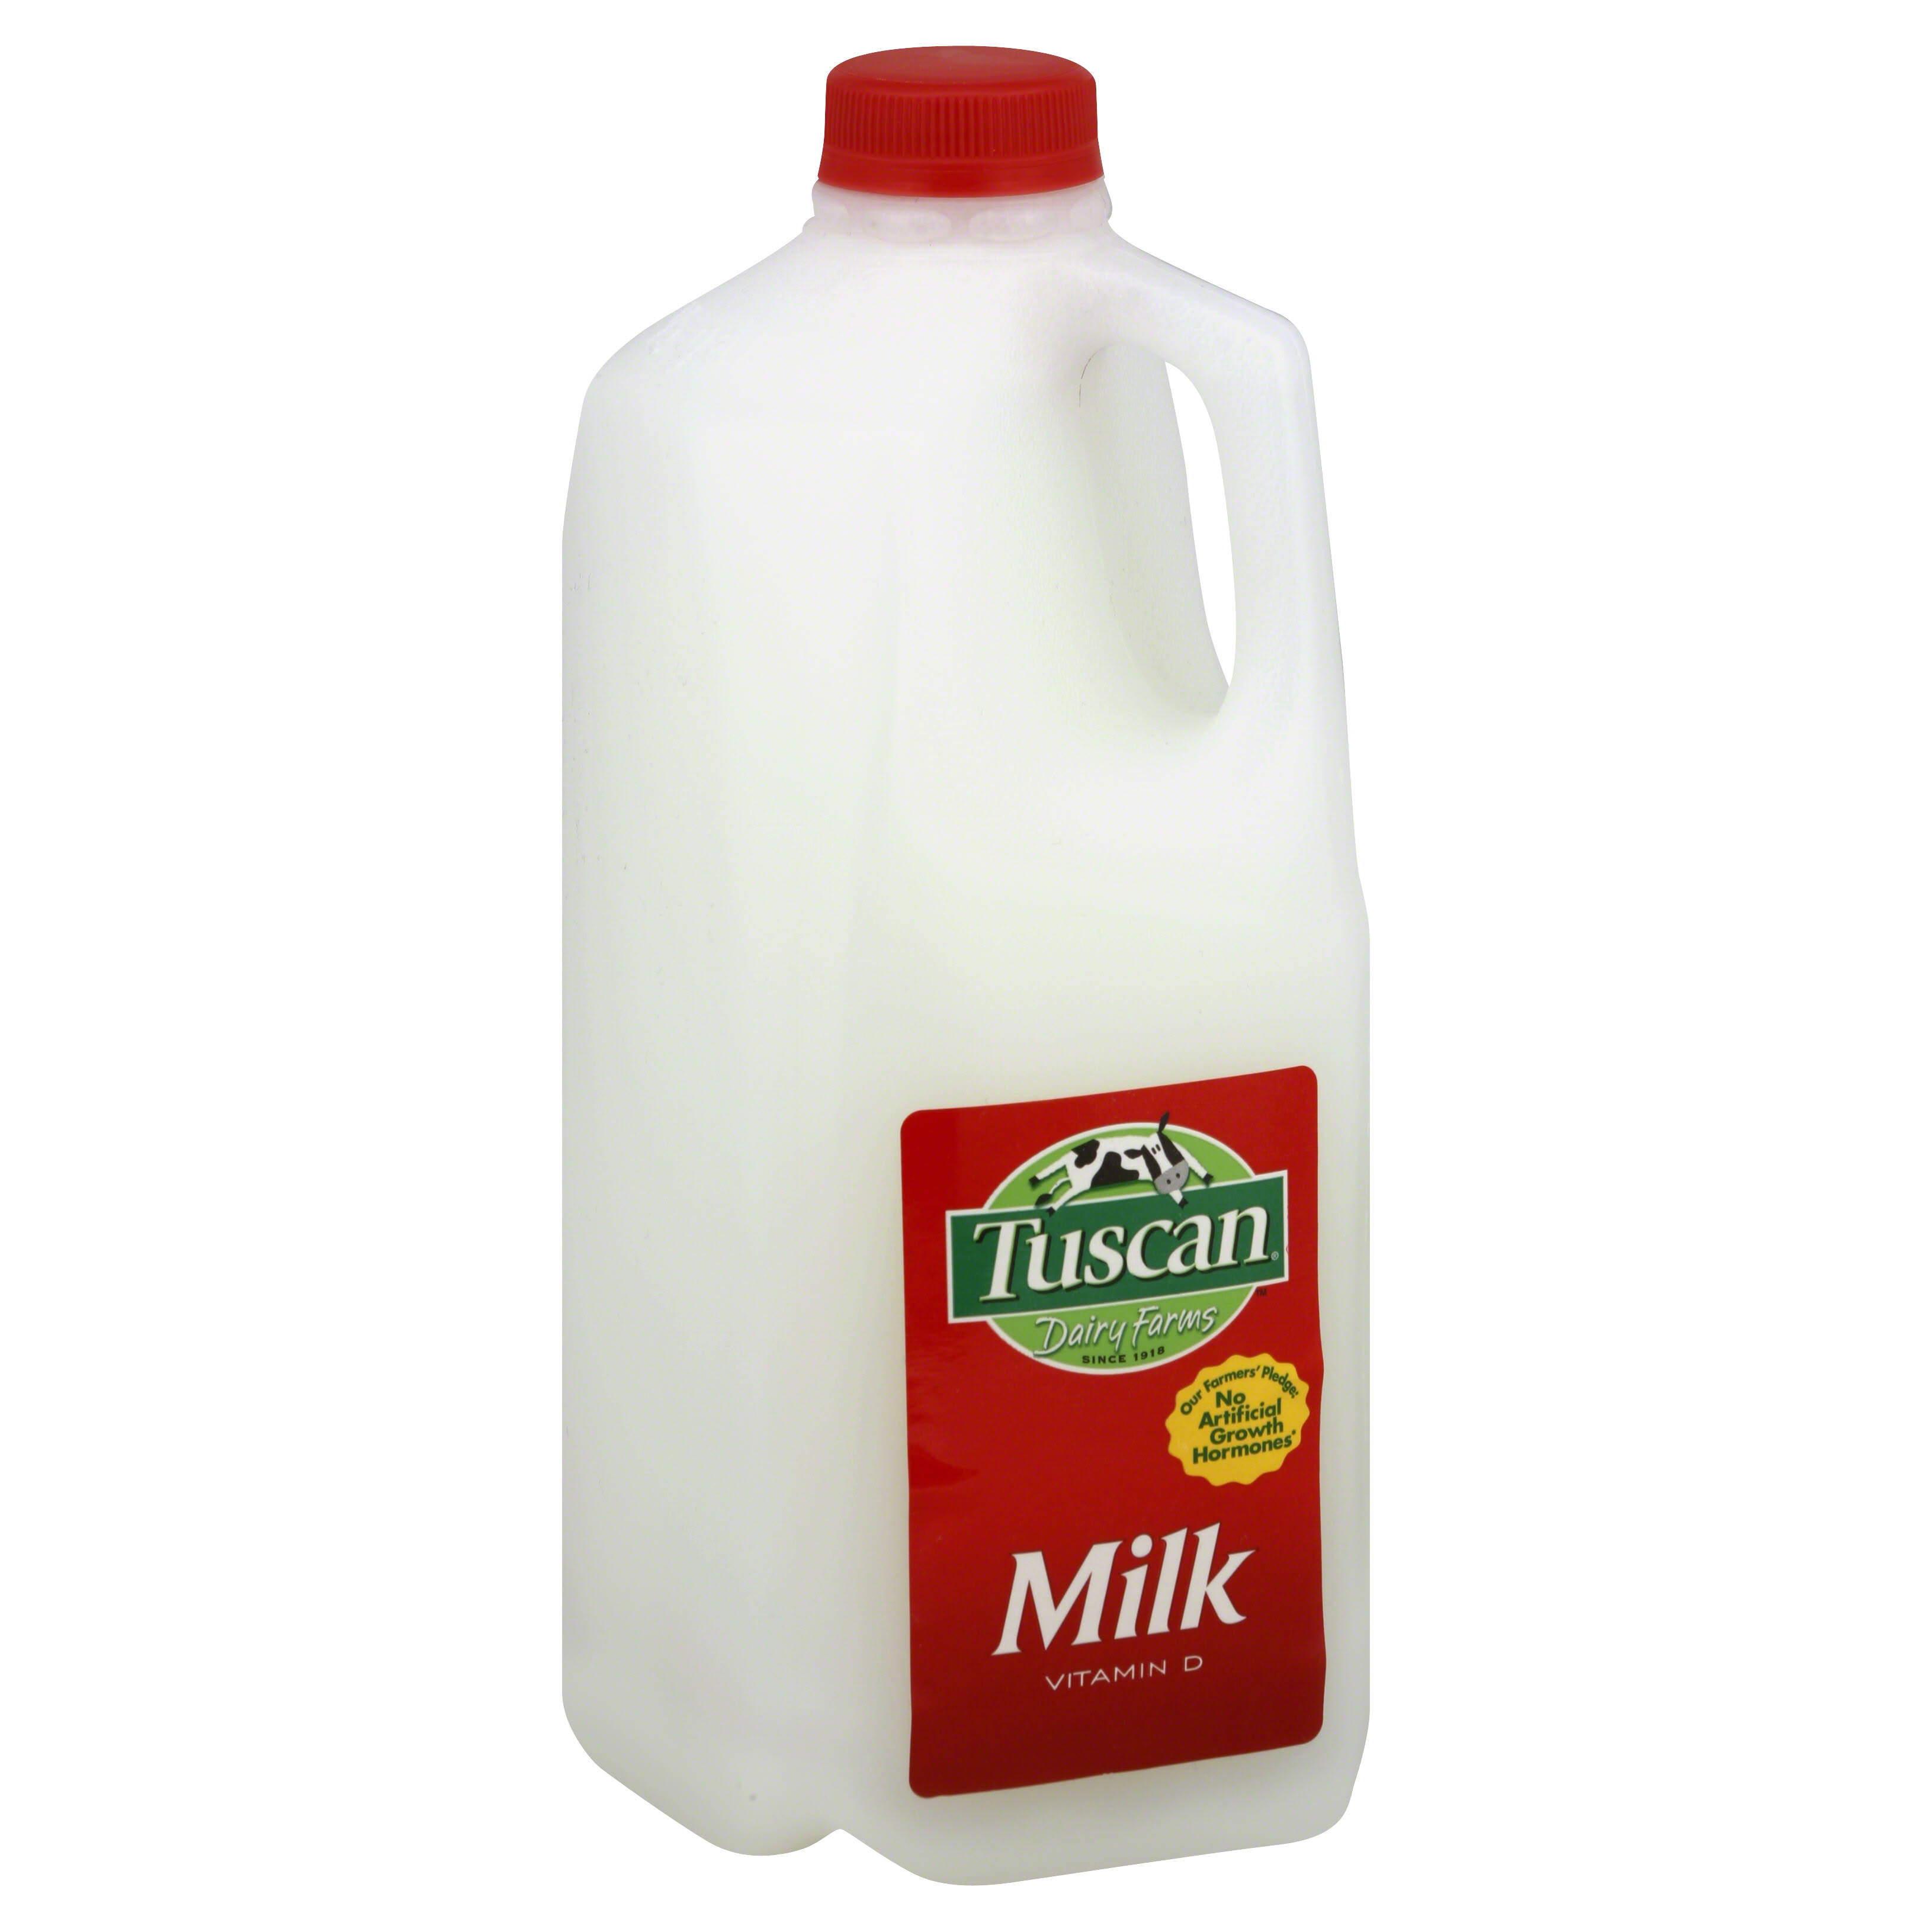 Tuscan Dairy Whole Vitamin D Milk - 64oz